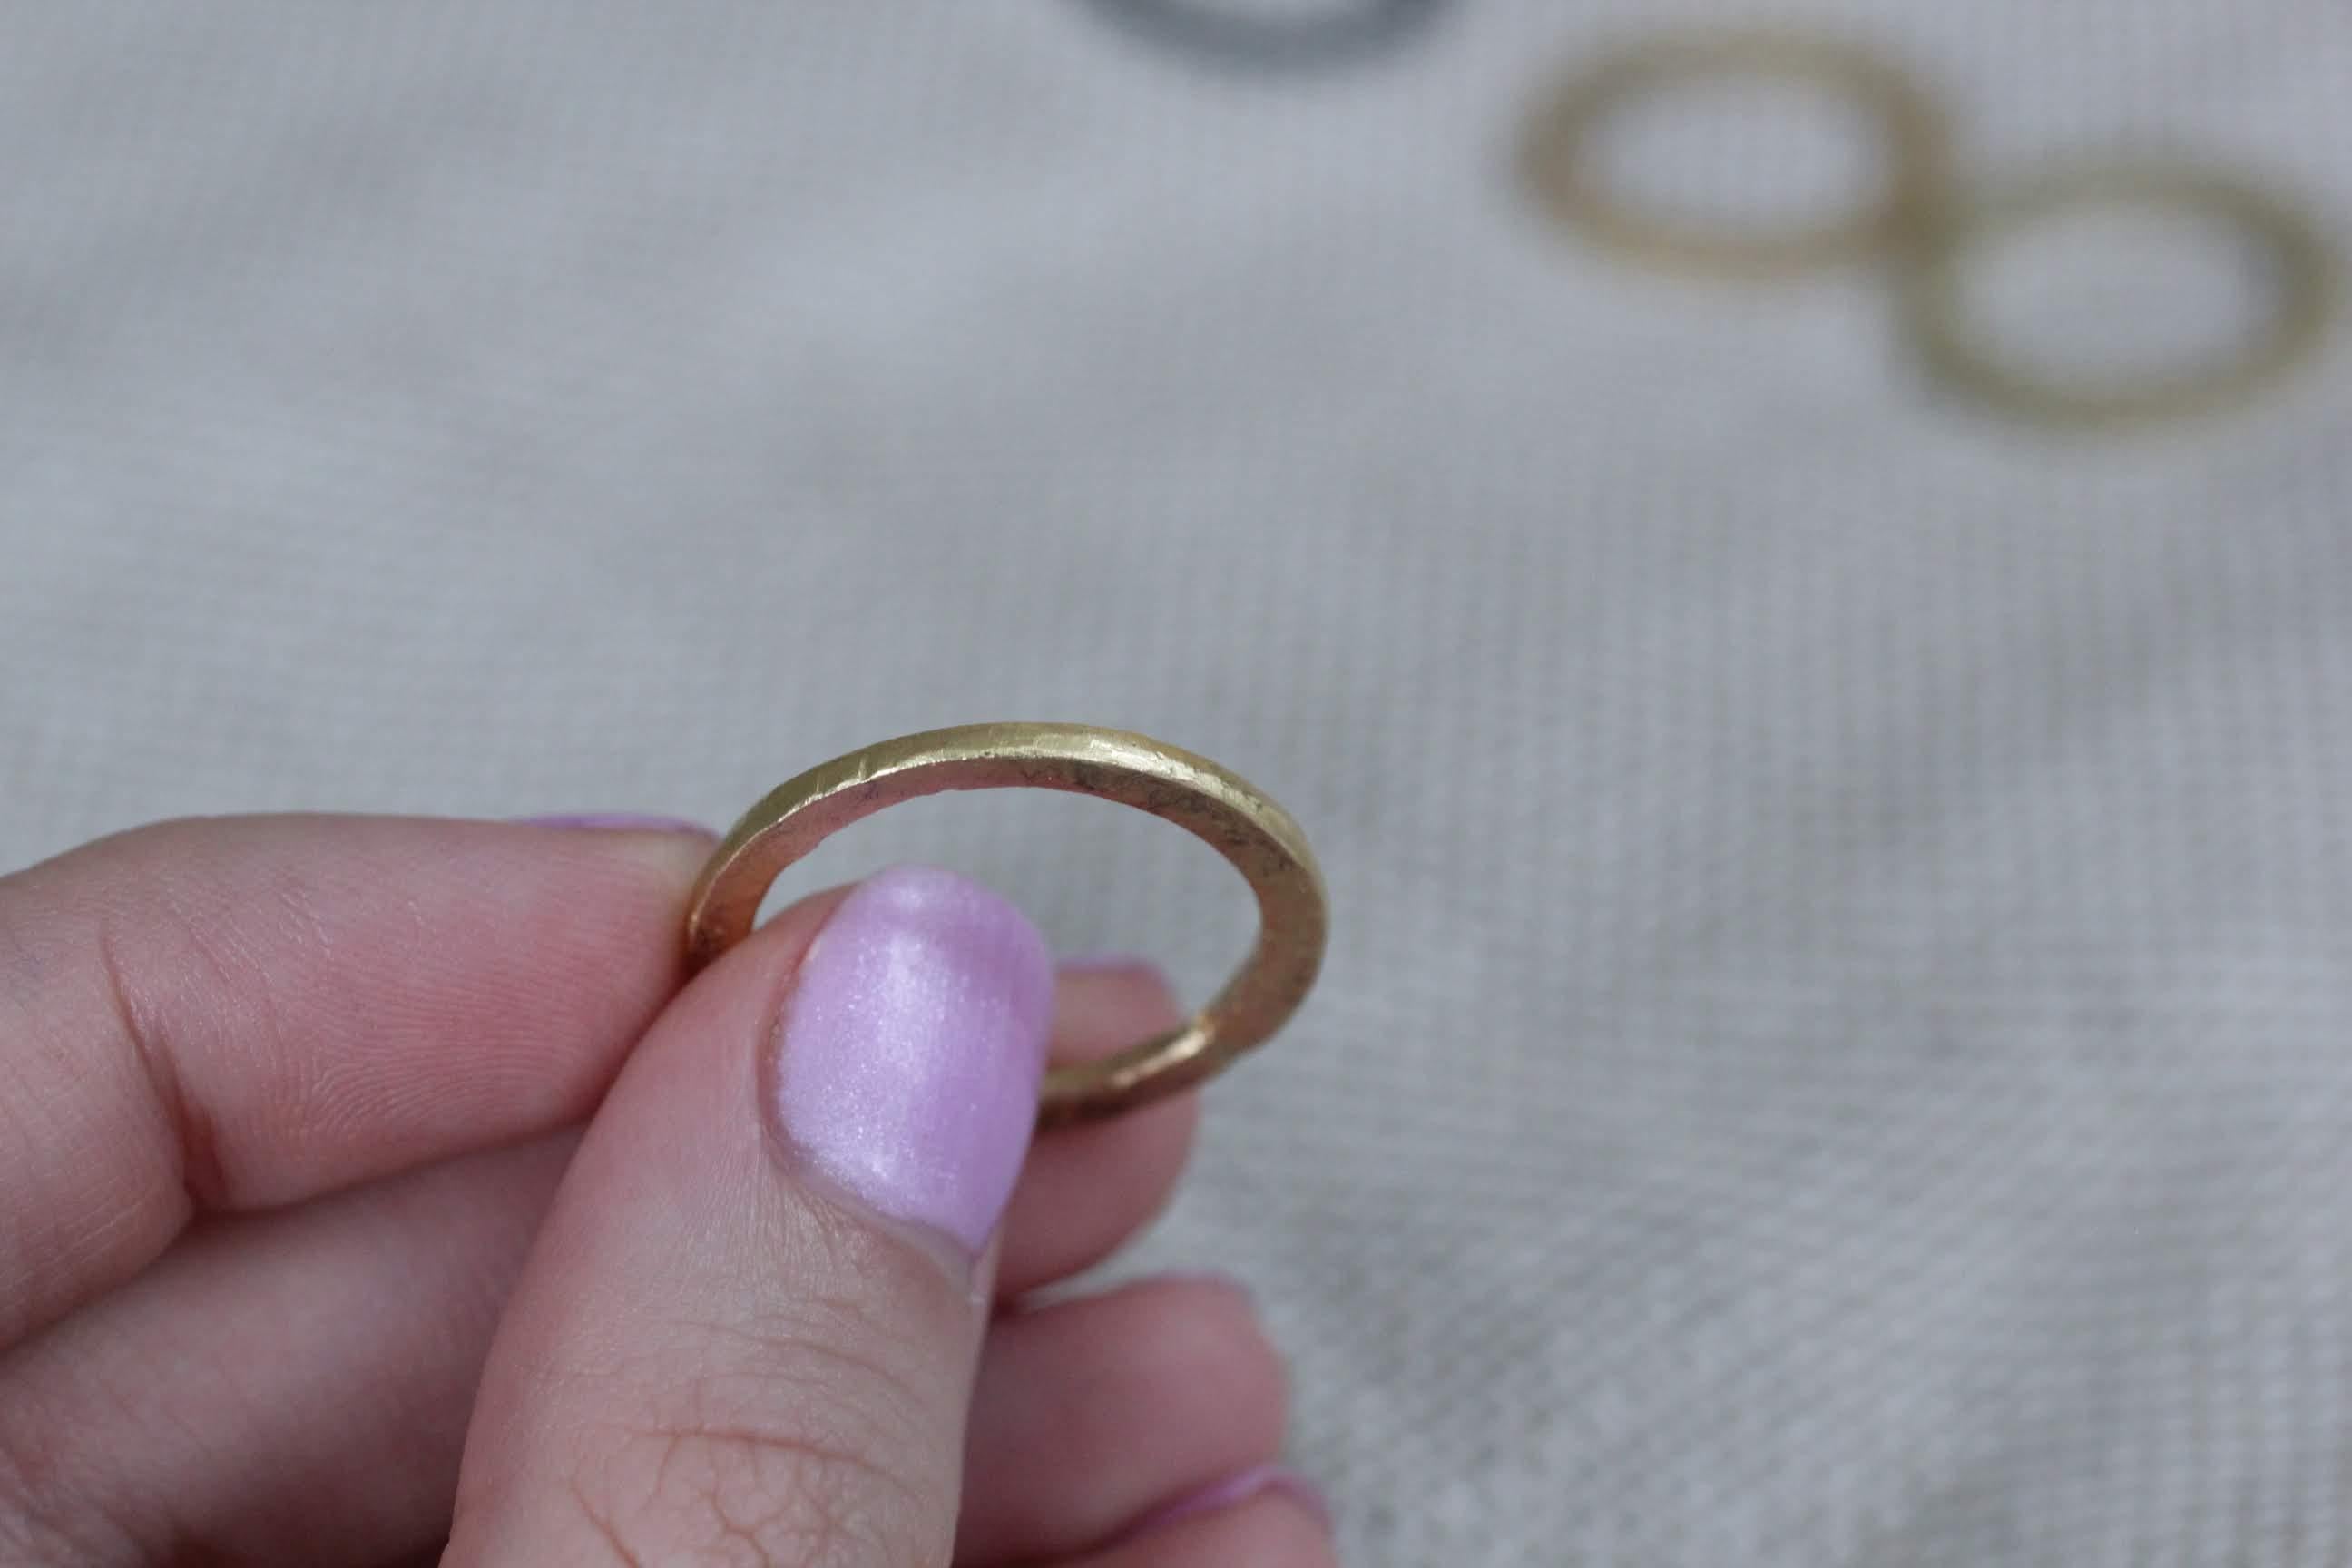 3mm wedding band on finger